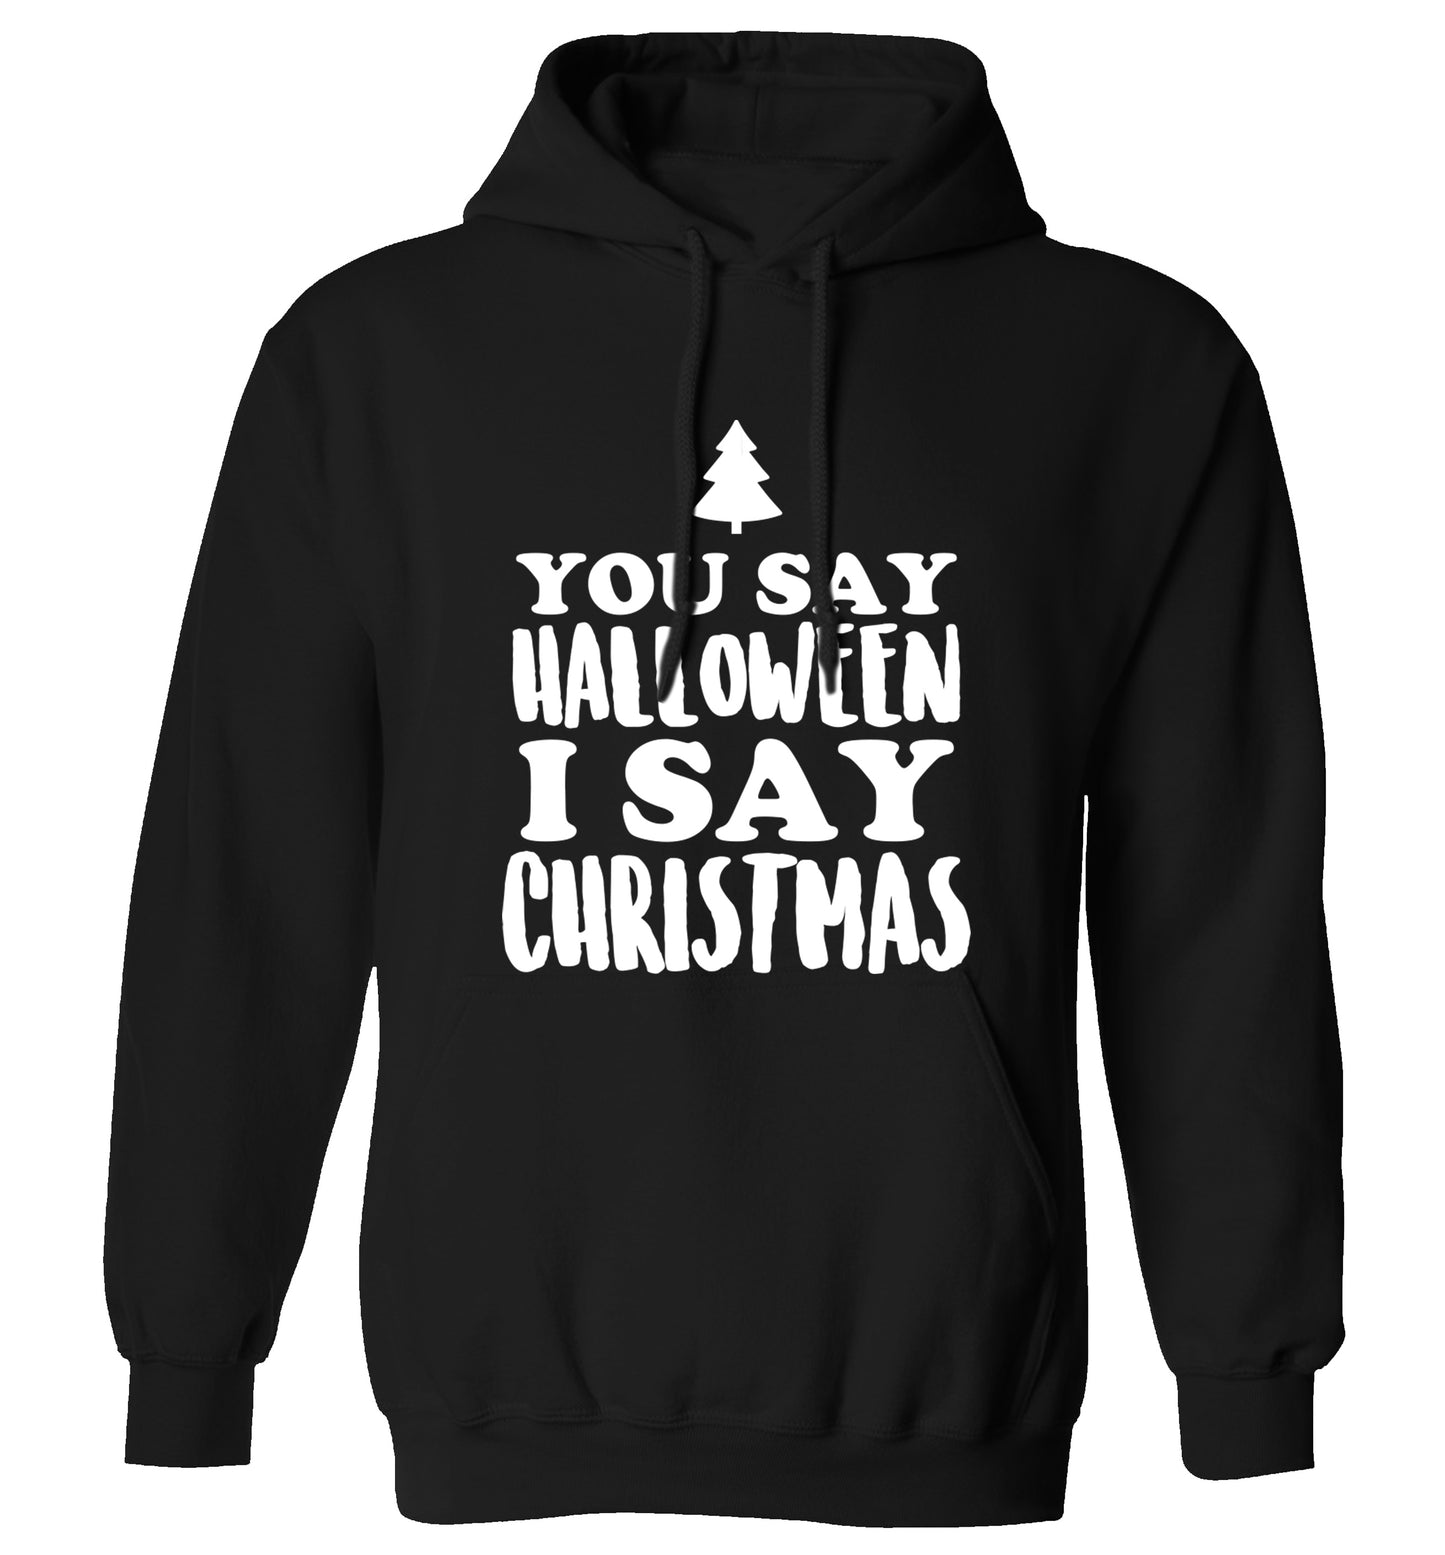 You say halloween I say christmas! adults unisex black hoodie 2XL